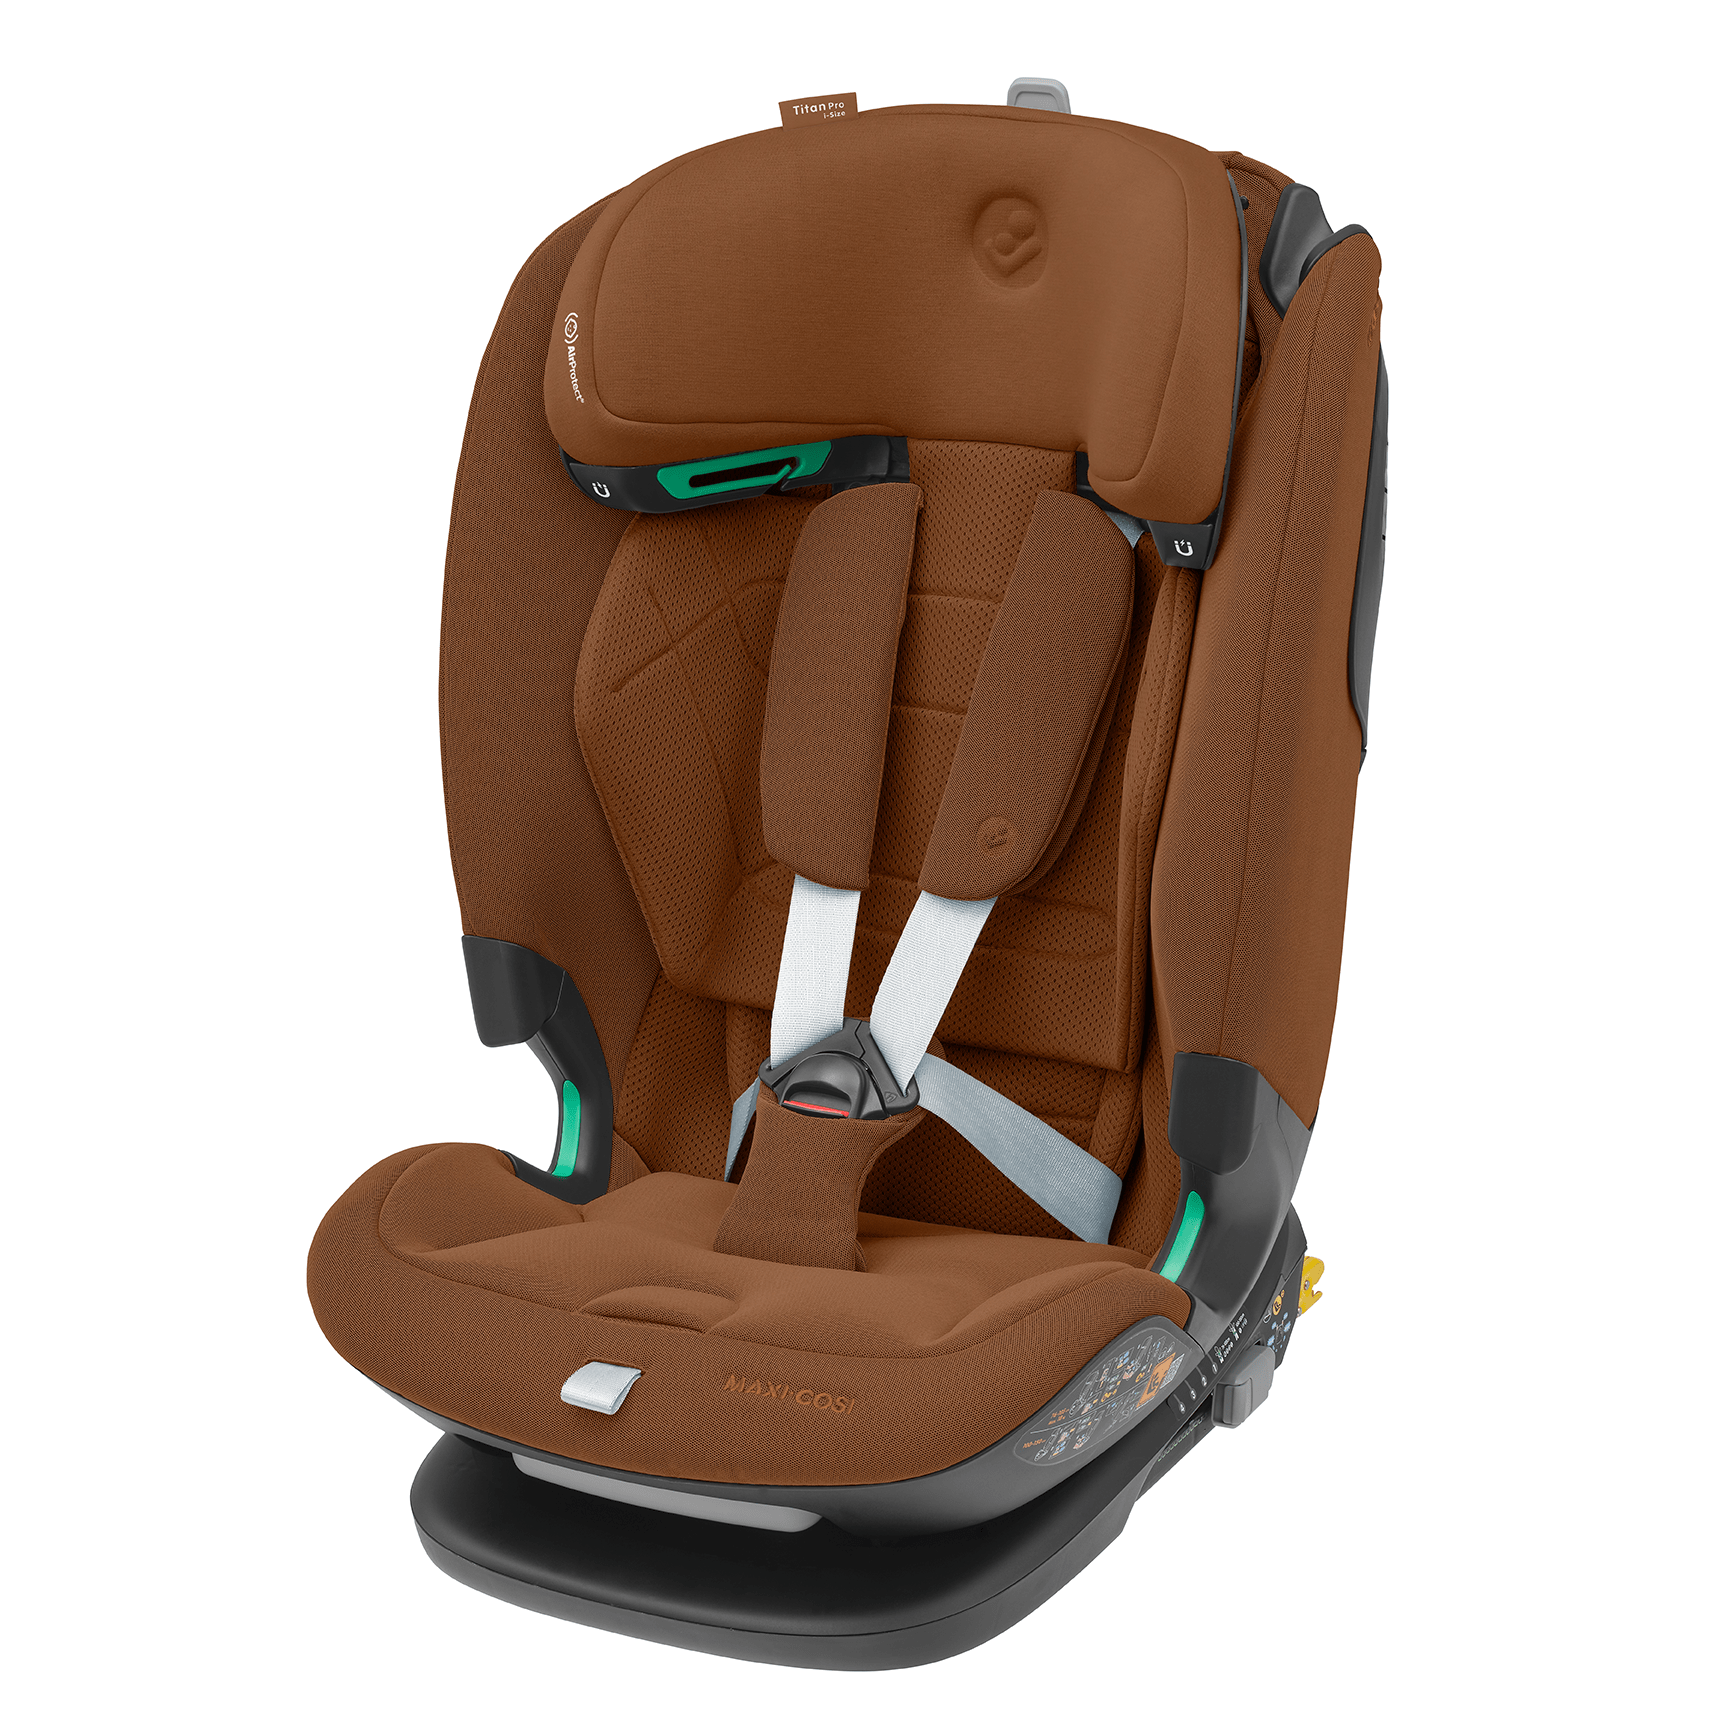 Maxi-Cosi baby car seats Maxi-Cosi Titan Pro 2 i-Size Car Seat in Authentic Cognac 8618650111